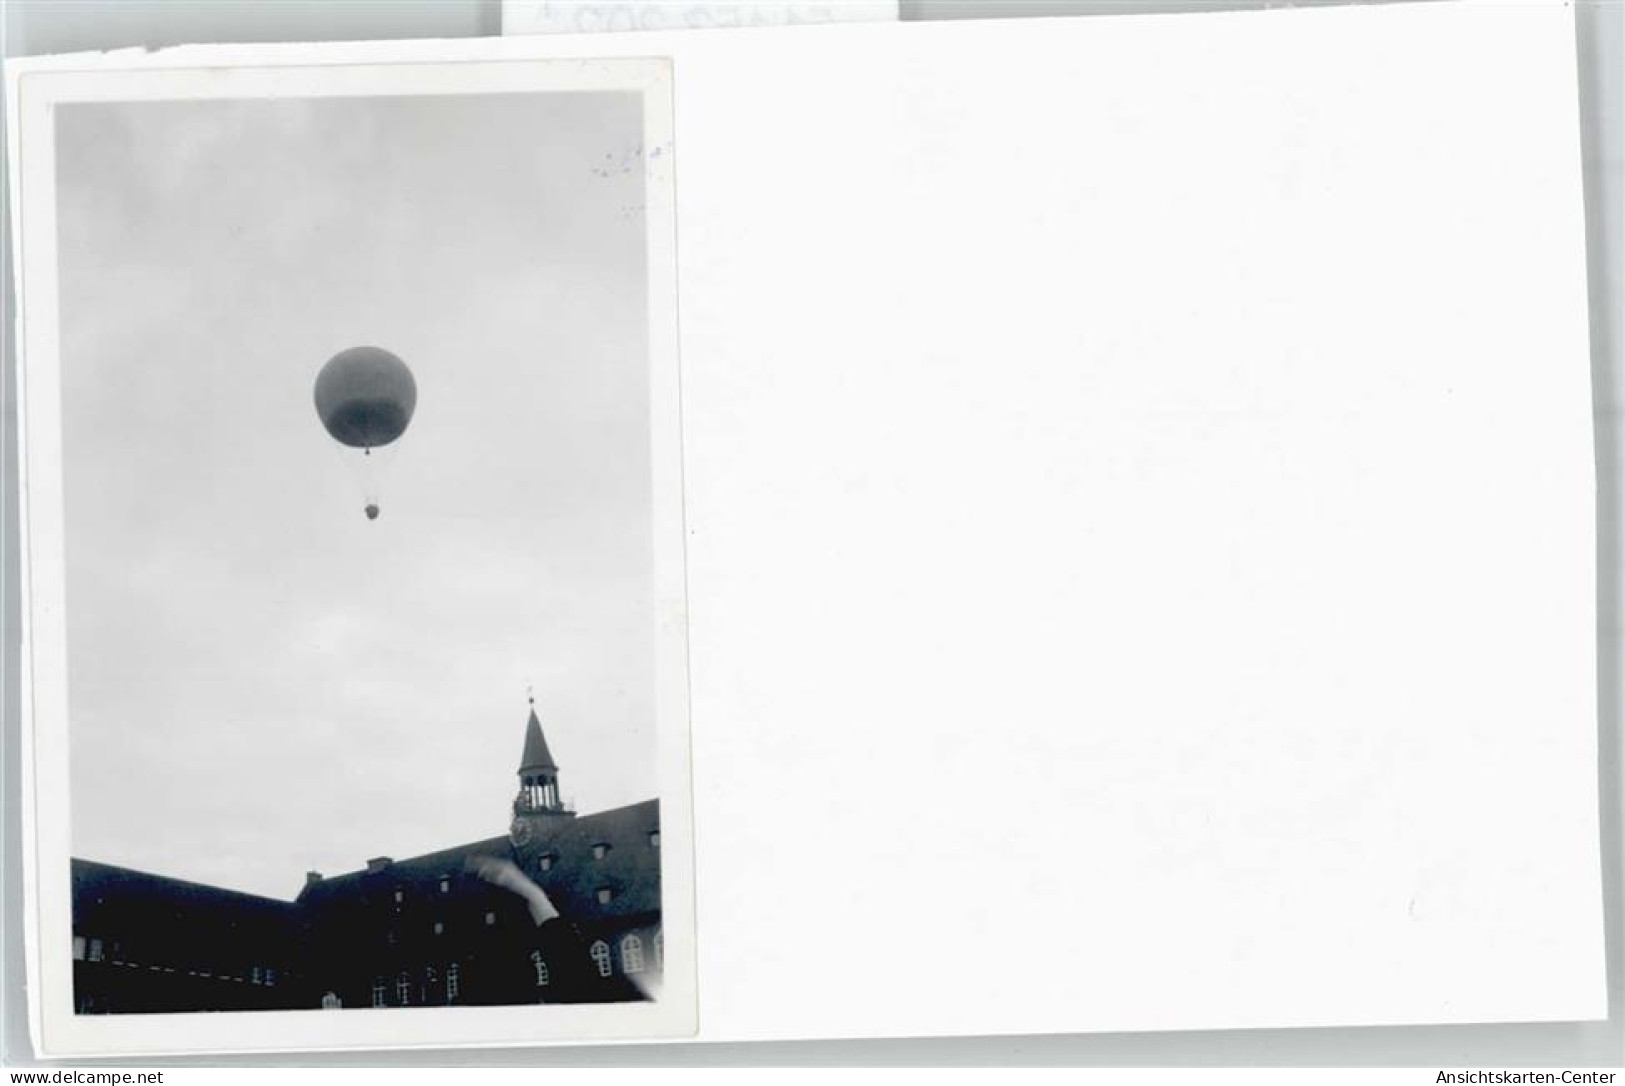 51153202 - Foto - Balloons